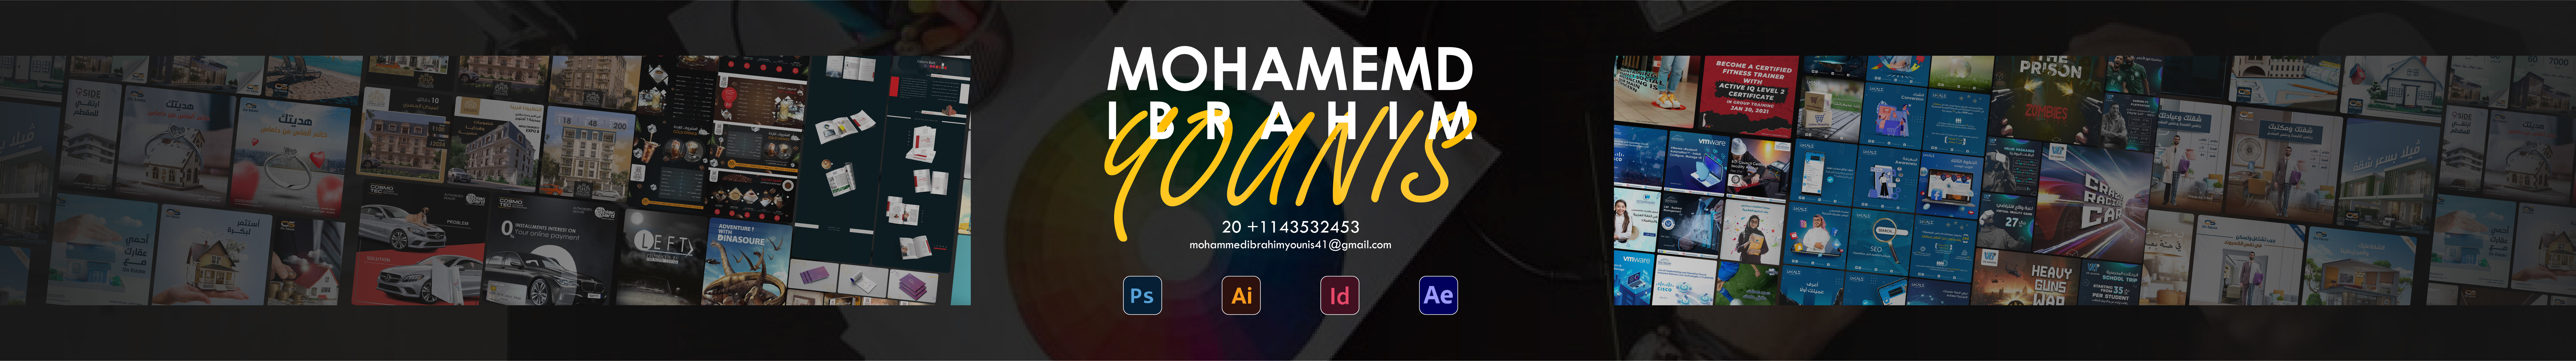 Banner de perfil de Mohammed Ibrahim